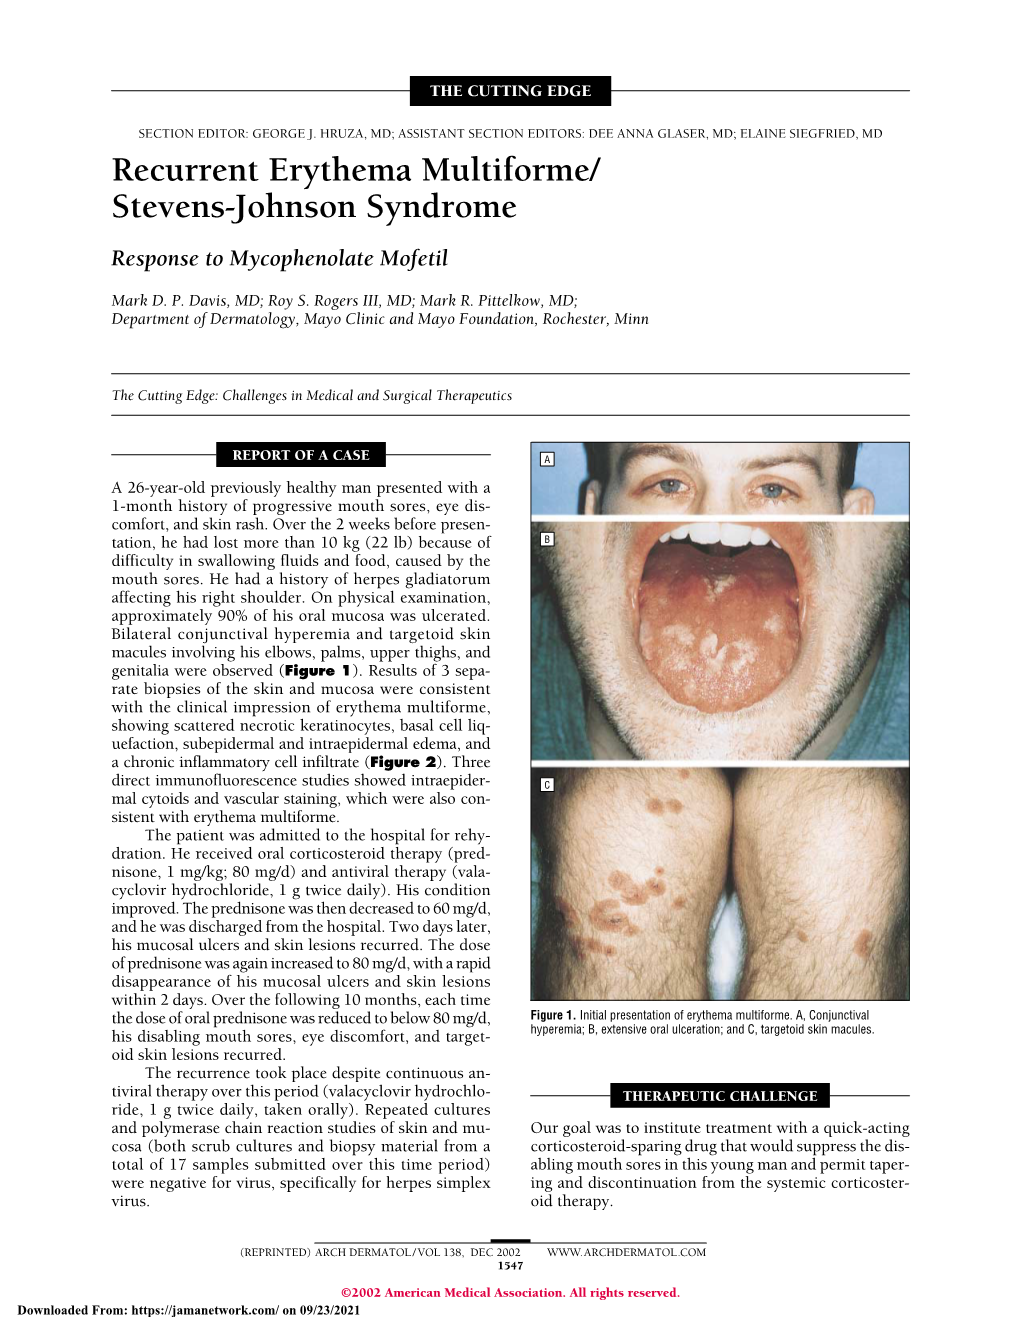 Recurrent Erythema Multiforme/ Stevens-Johnson Syndrome Response to Mycophenolate Mofetil